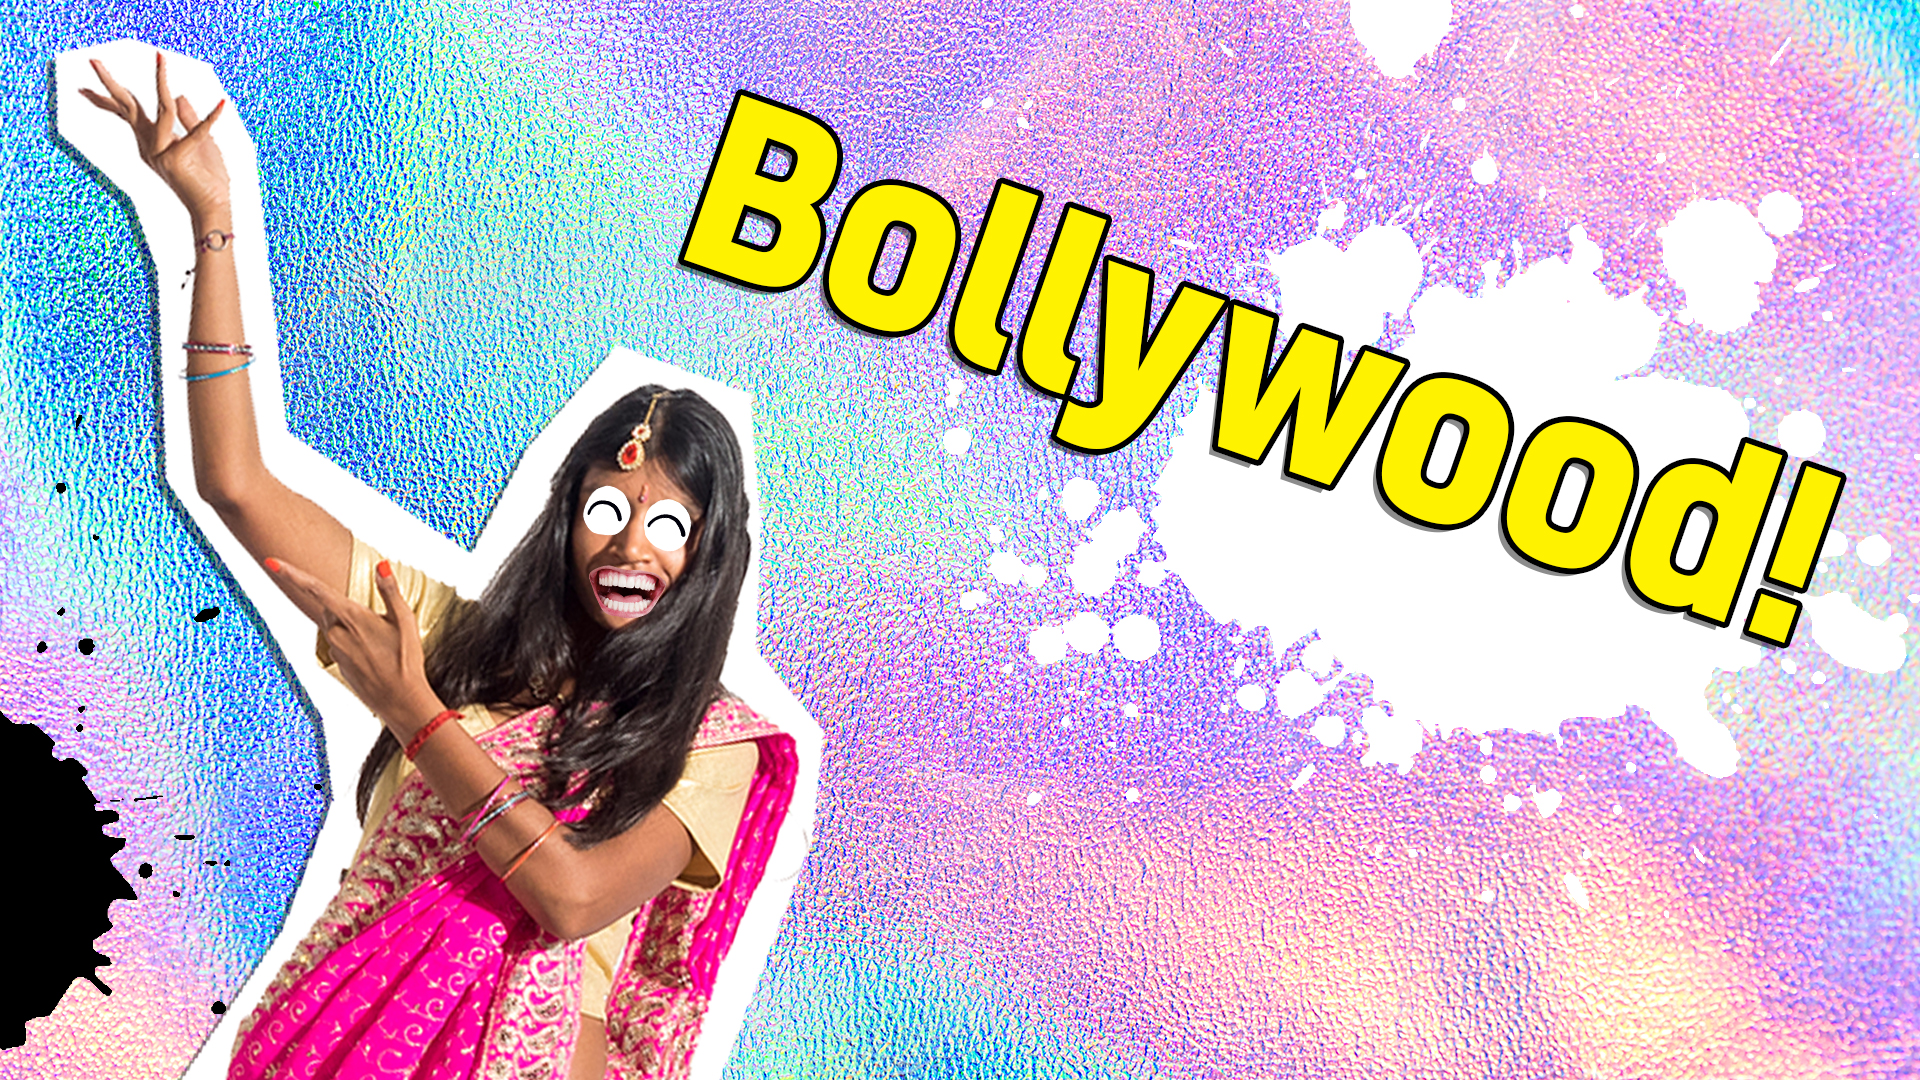 Result: Bollywood